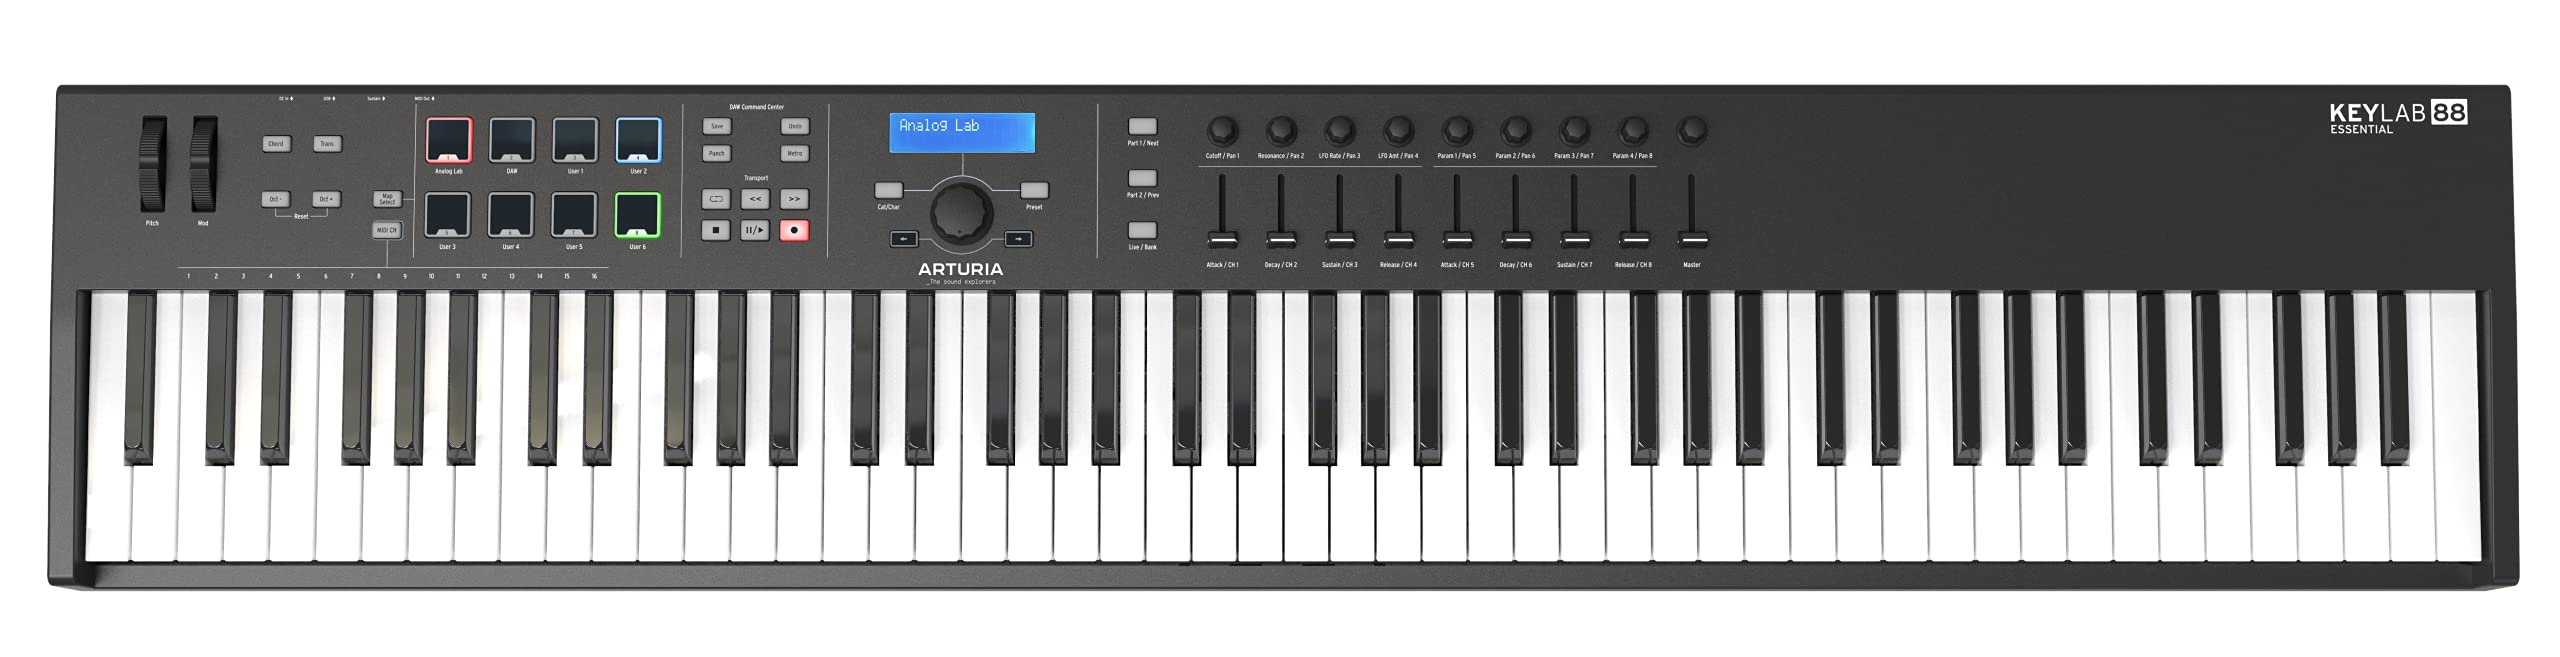 Arturia KeyLab Essential 88 - 88 键半配重 USB MIDI 键盘控制器